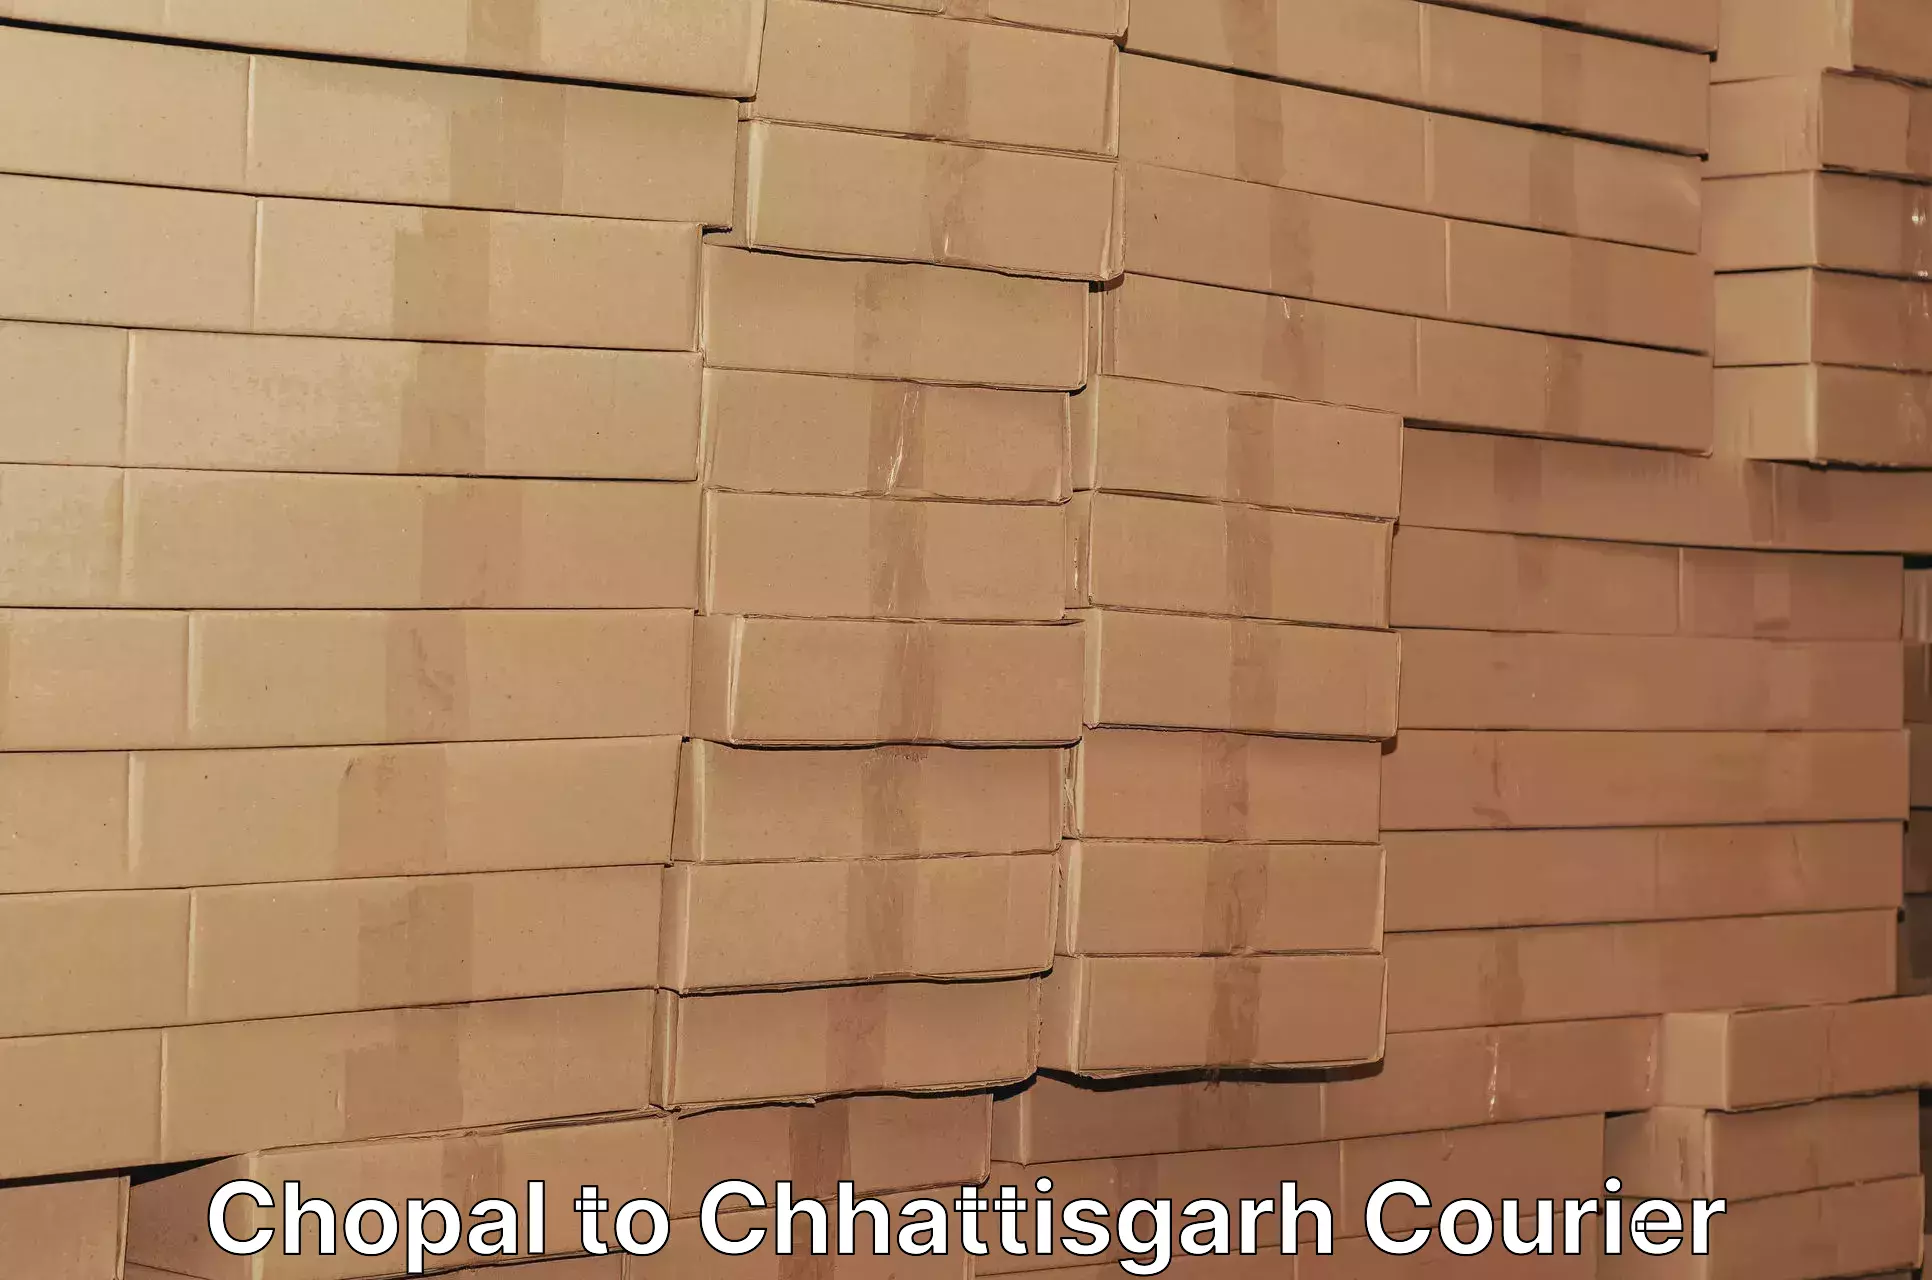 Urgent courier needs Chopal to Bastar